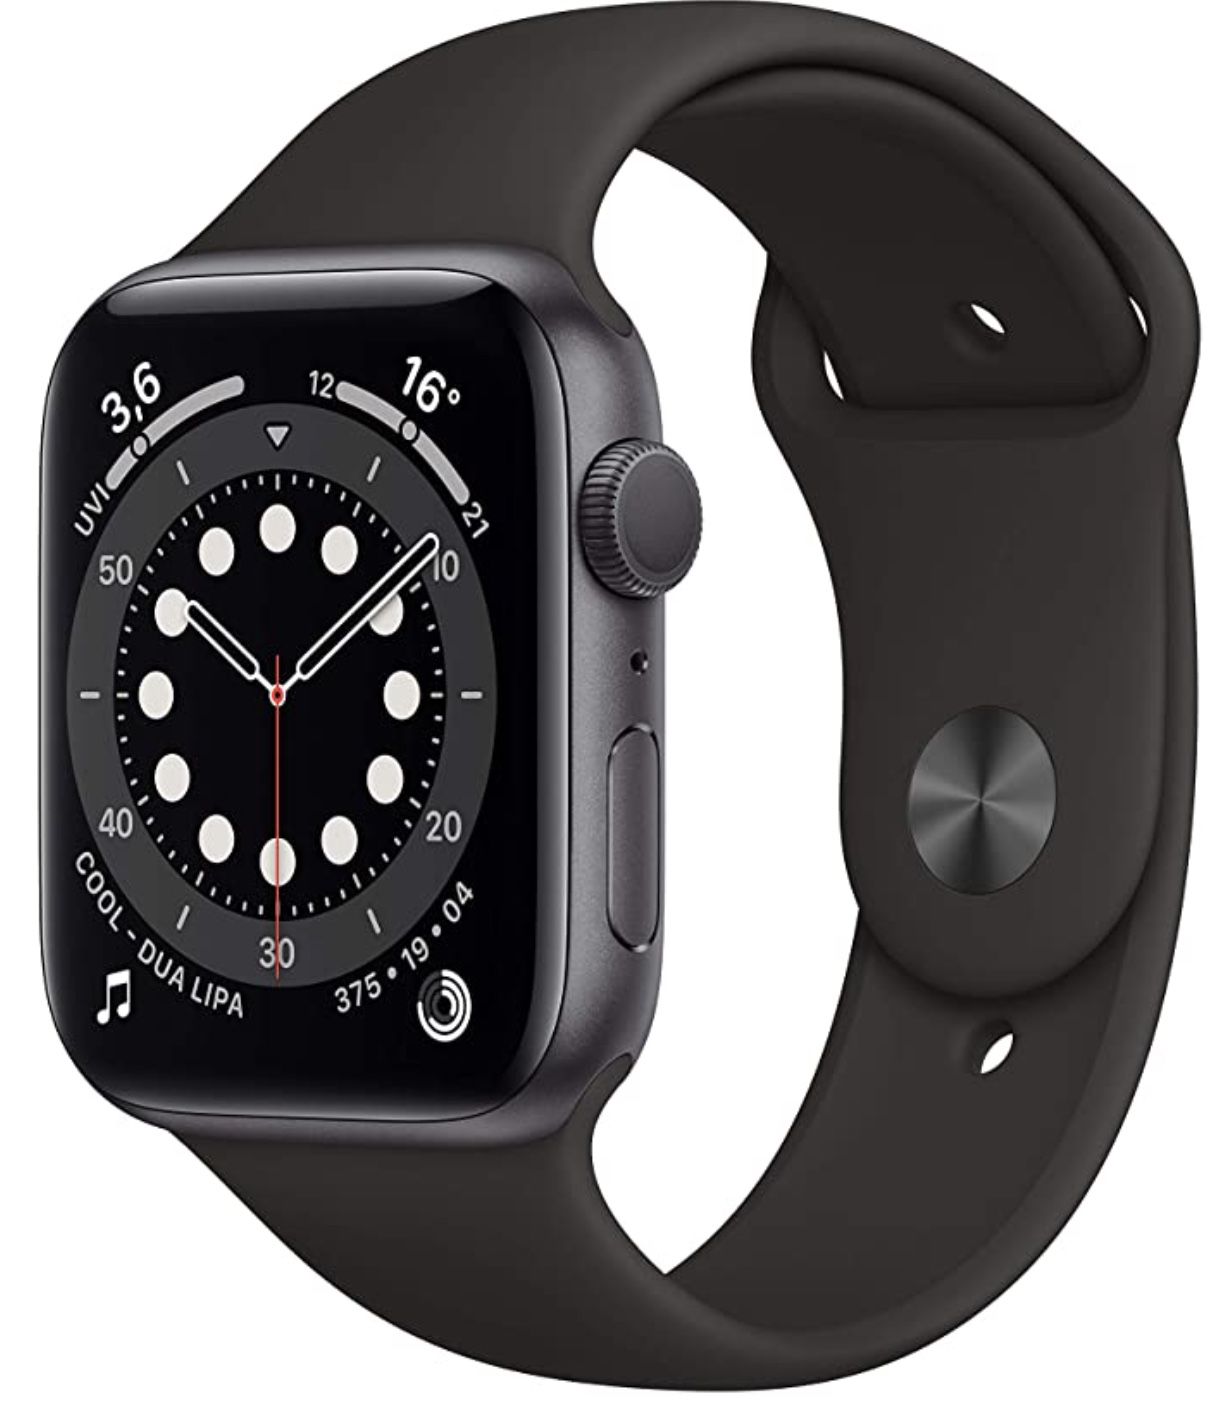 Apple Watch Series 6 (GPS) in Spacegrau 44mm Aluminium mit Sportarmband für 389€ (statt 459€)